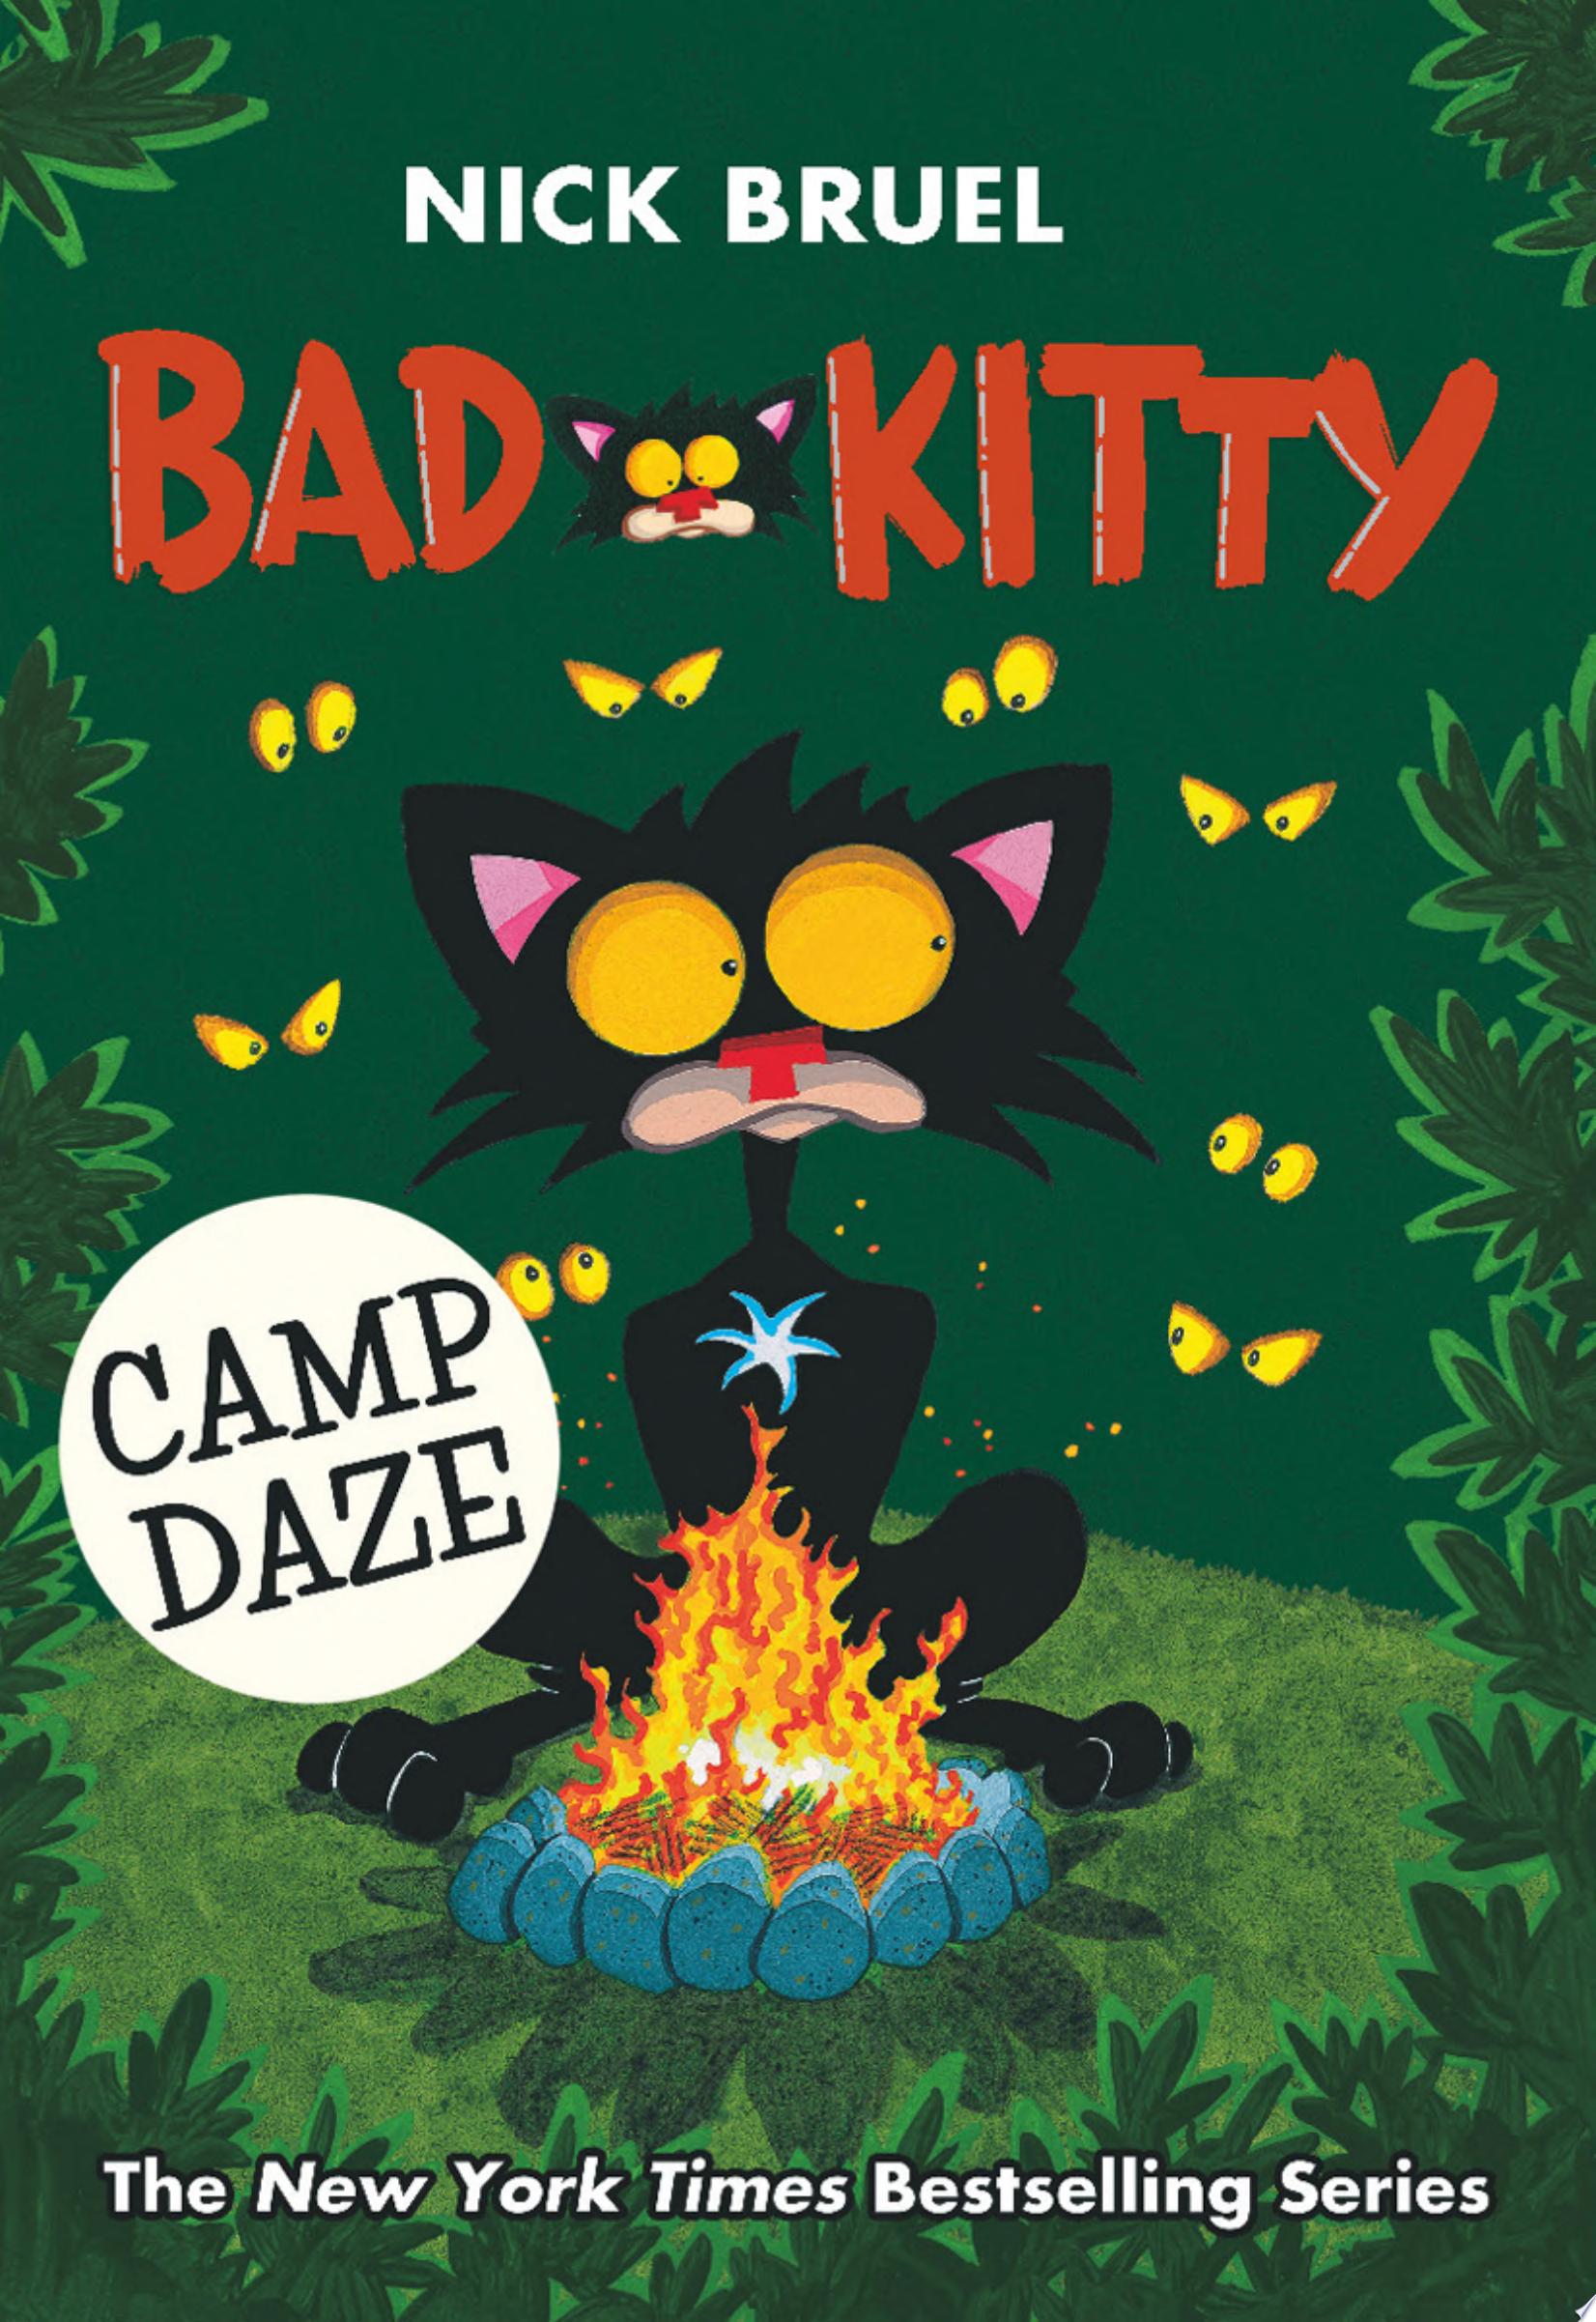 Image for "Bad Kitty Camp Daze"